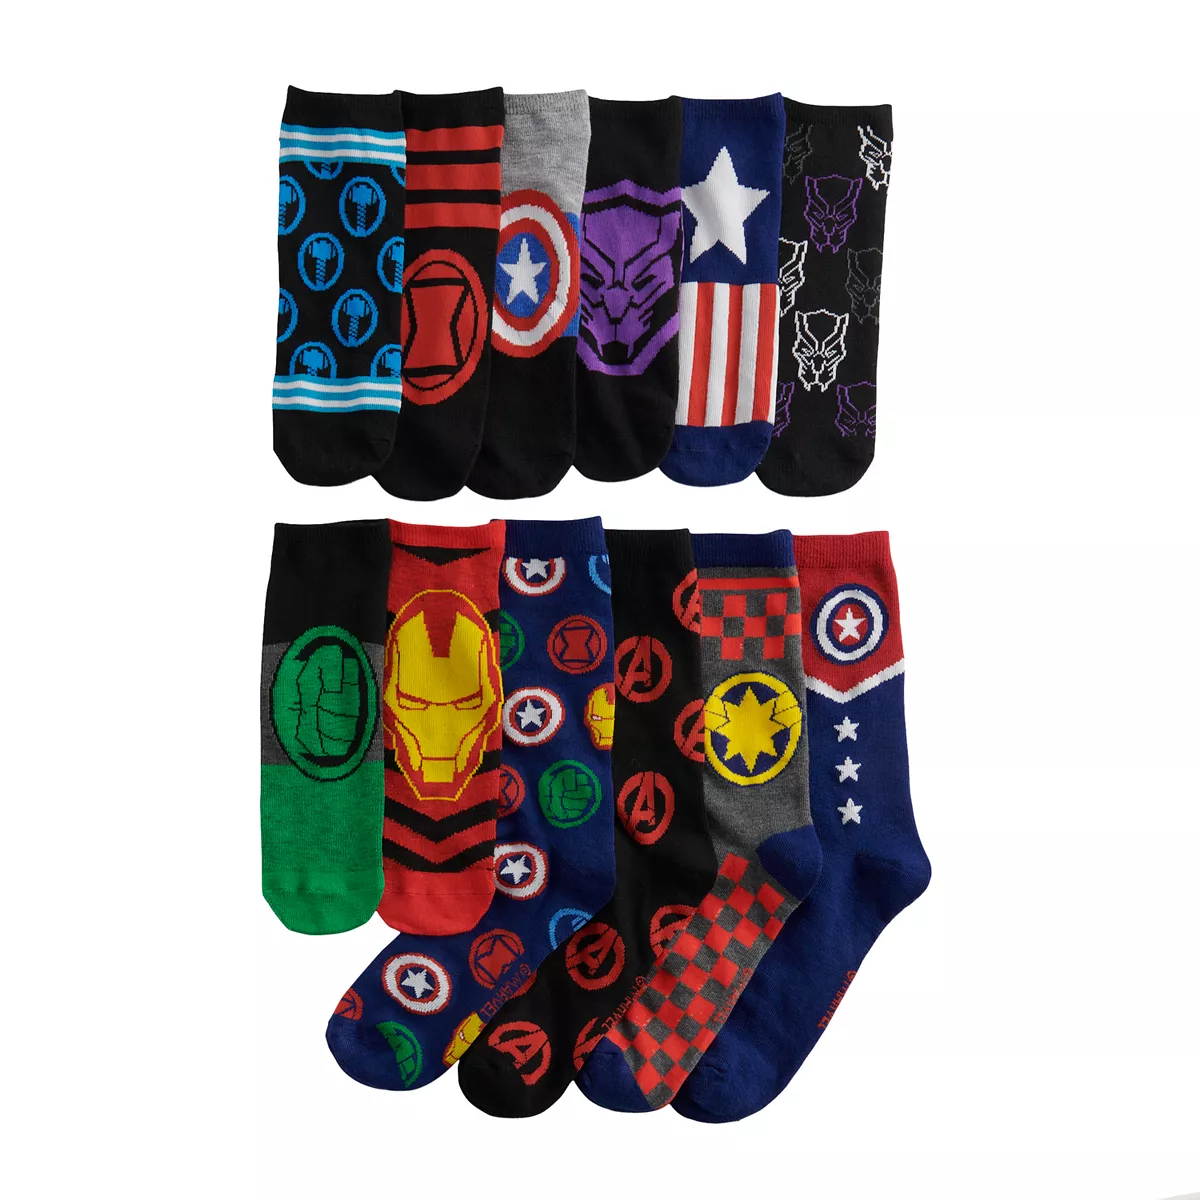 New 2020 Marvel Socks Advent Calendars Available Now! {Men's} hello